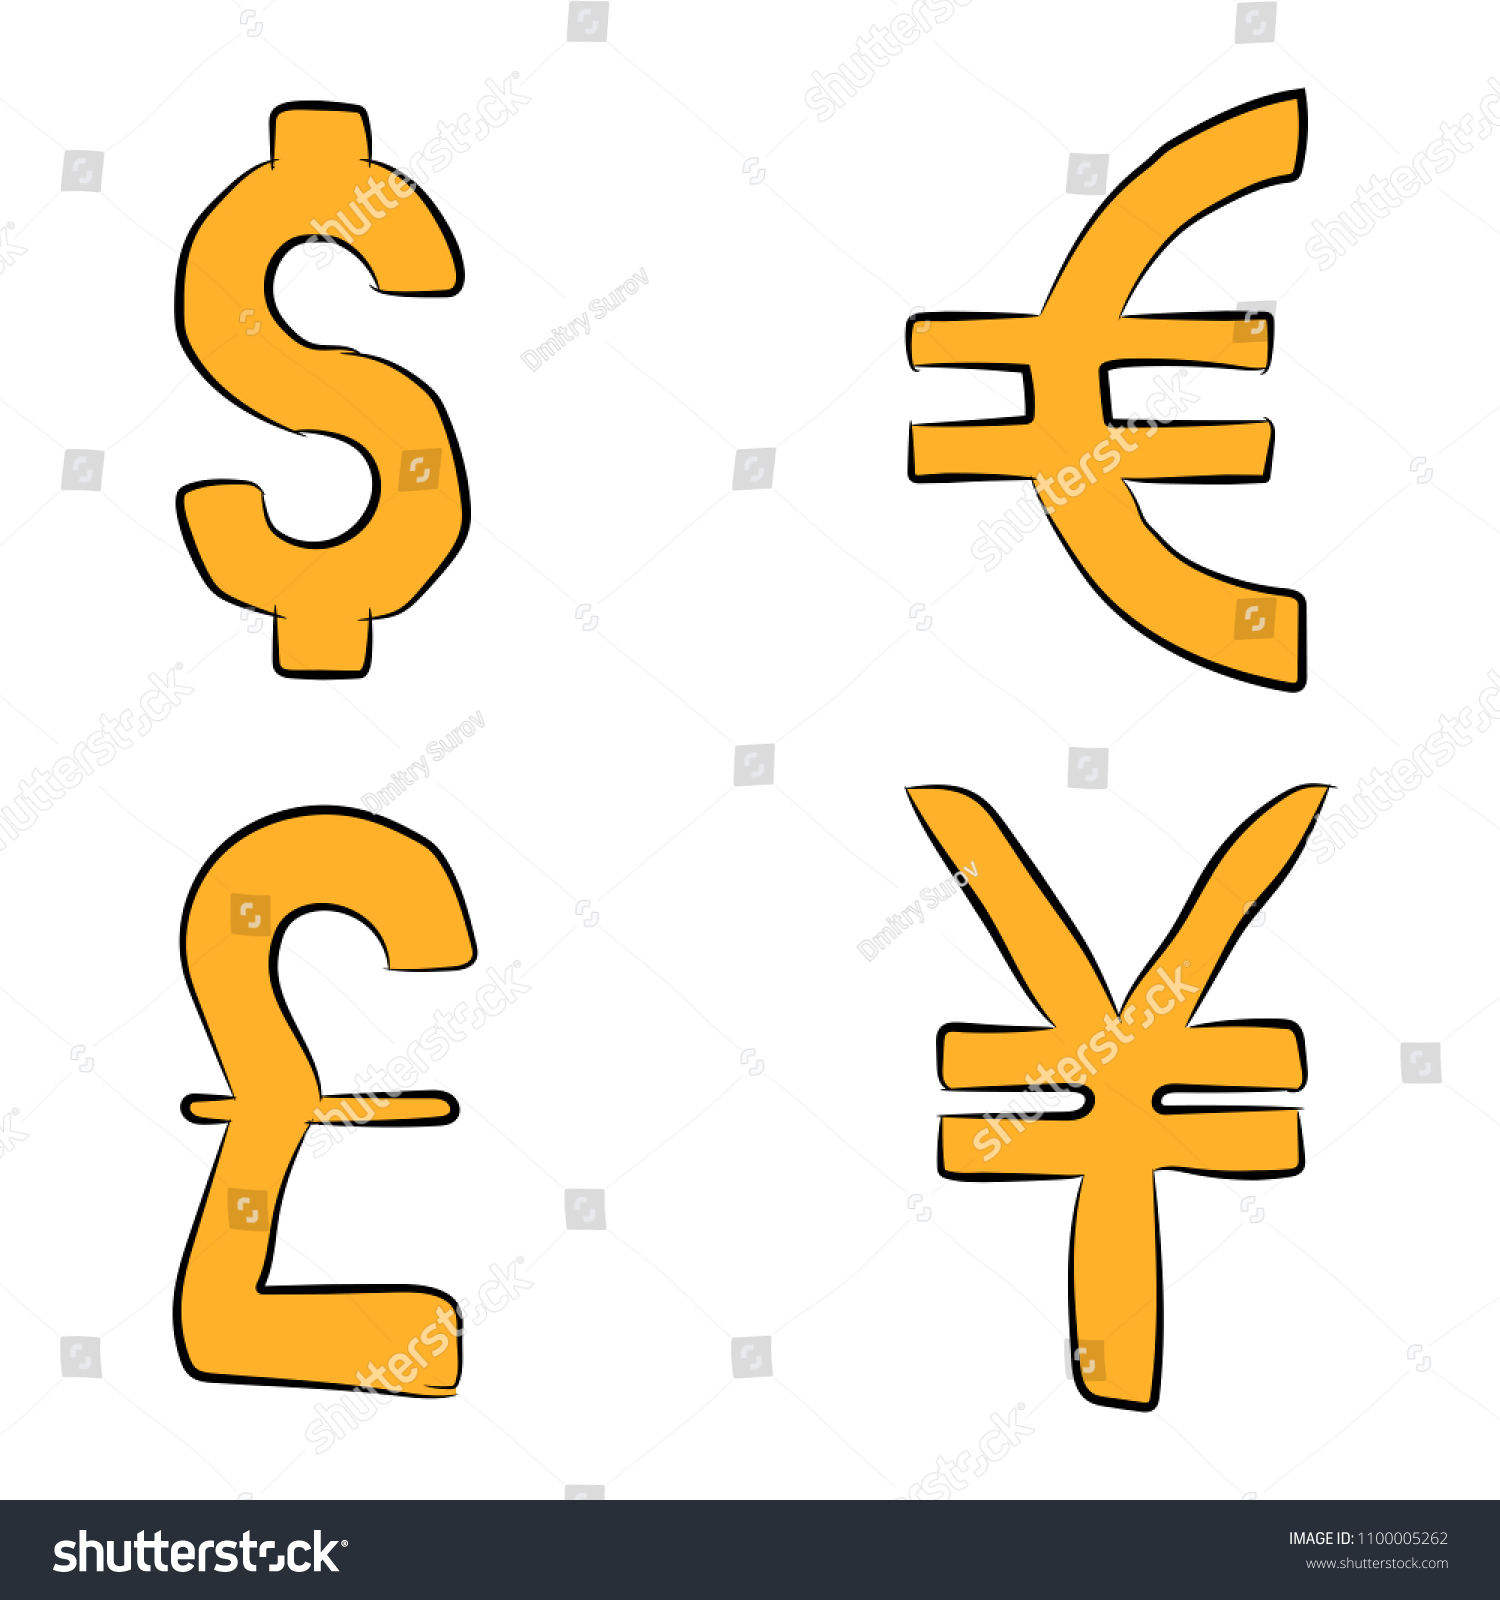 Currency Exchange Symbols